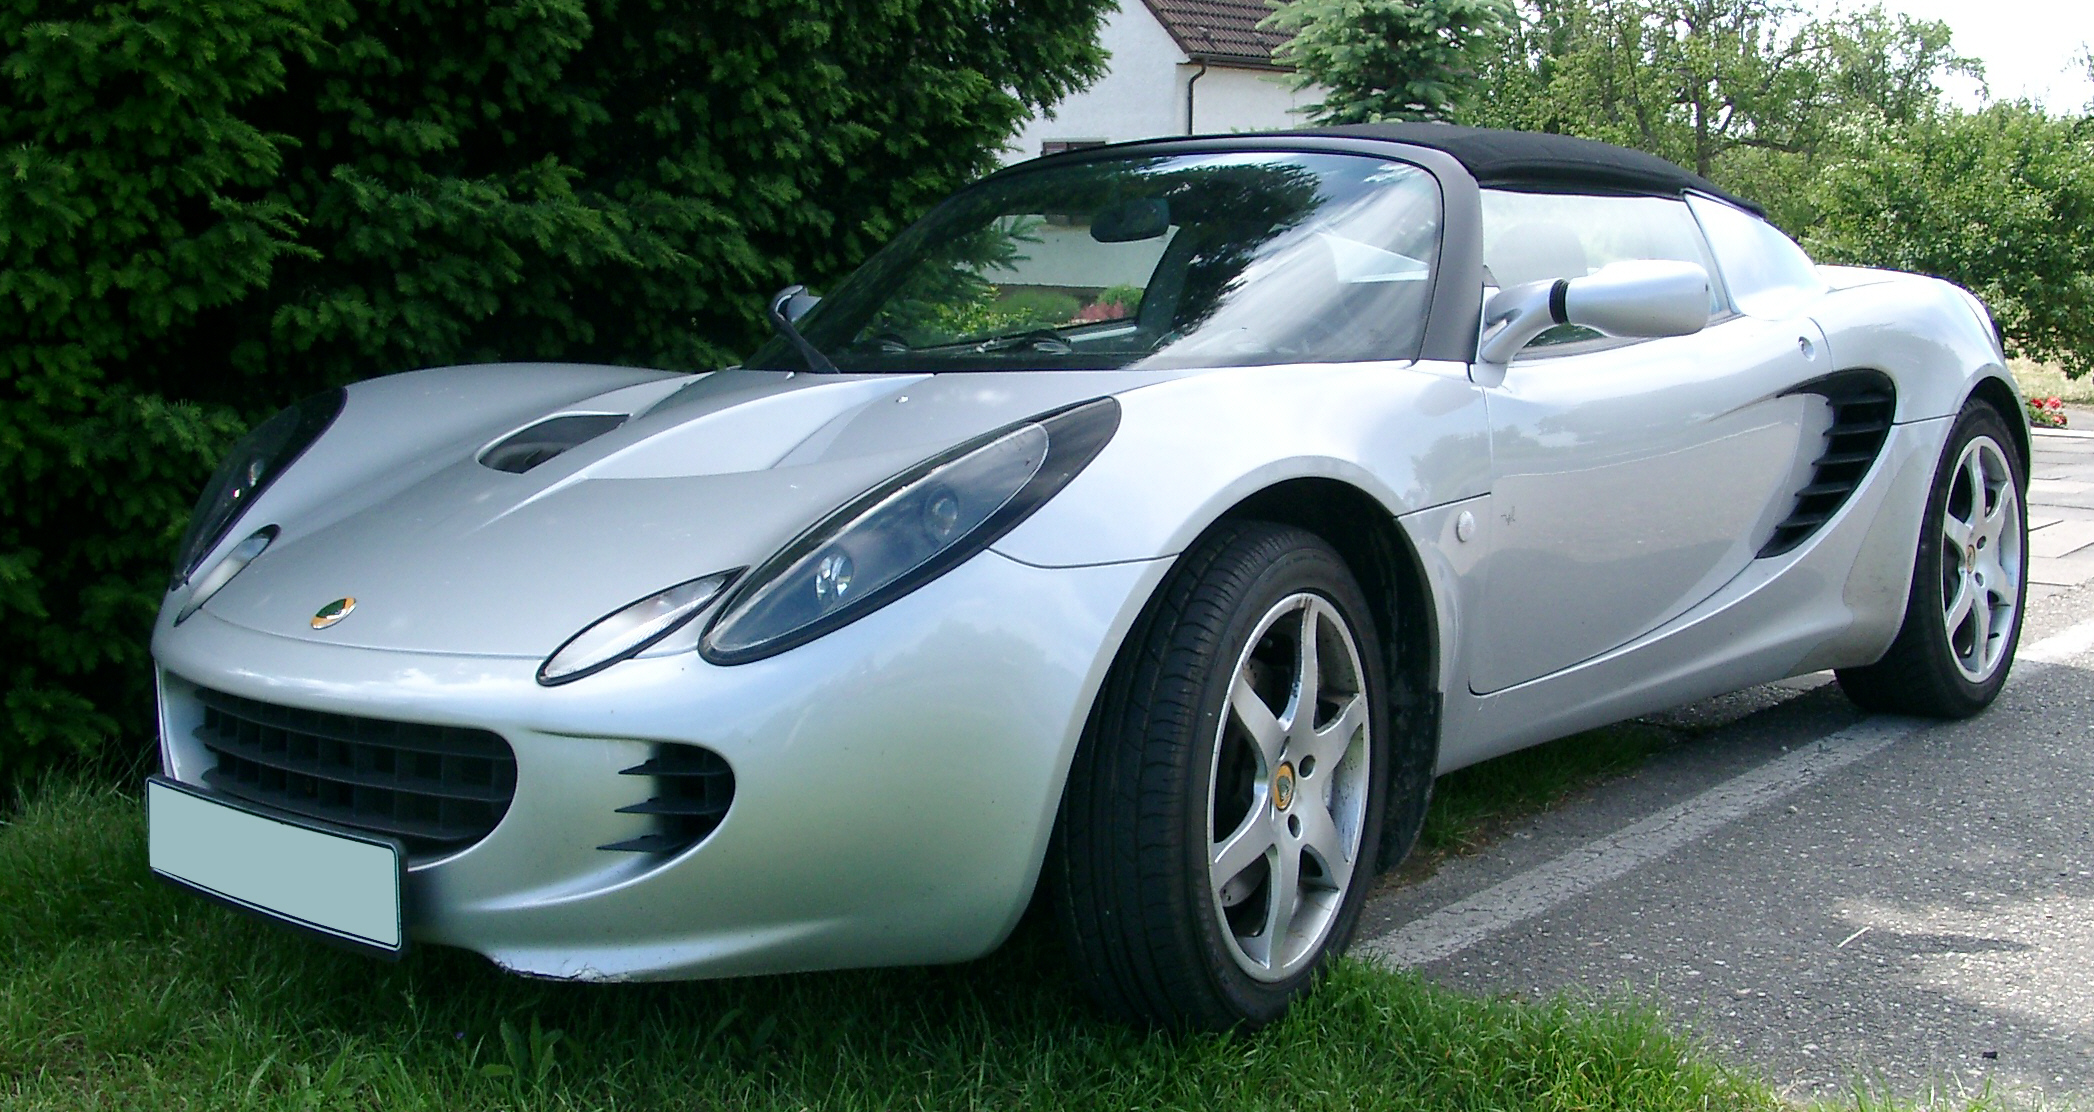 File:Lotus Elise 111R front 20070520.jpg - Wikimedia Commons